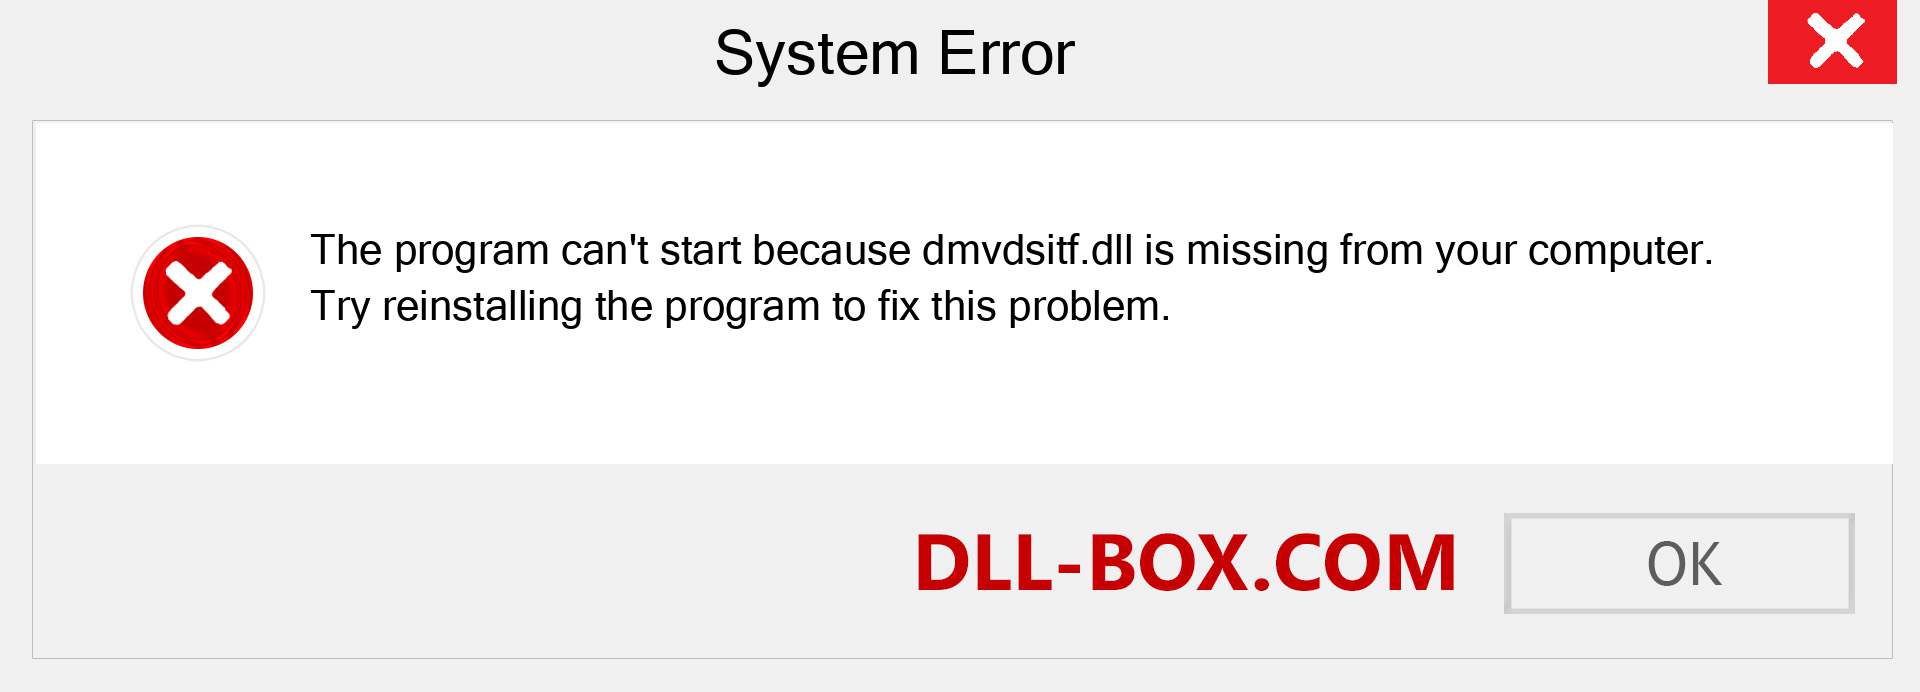  dmvdsitf.dll file is missing?. Download for Windows 7, 8, 10 - Fix  dmvdsitf dll Missing Error on Windows, photos, images